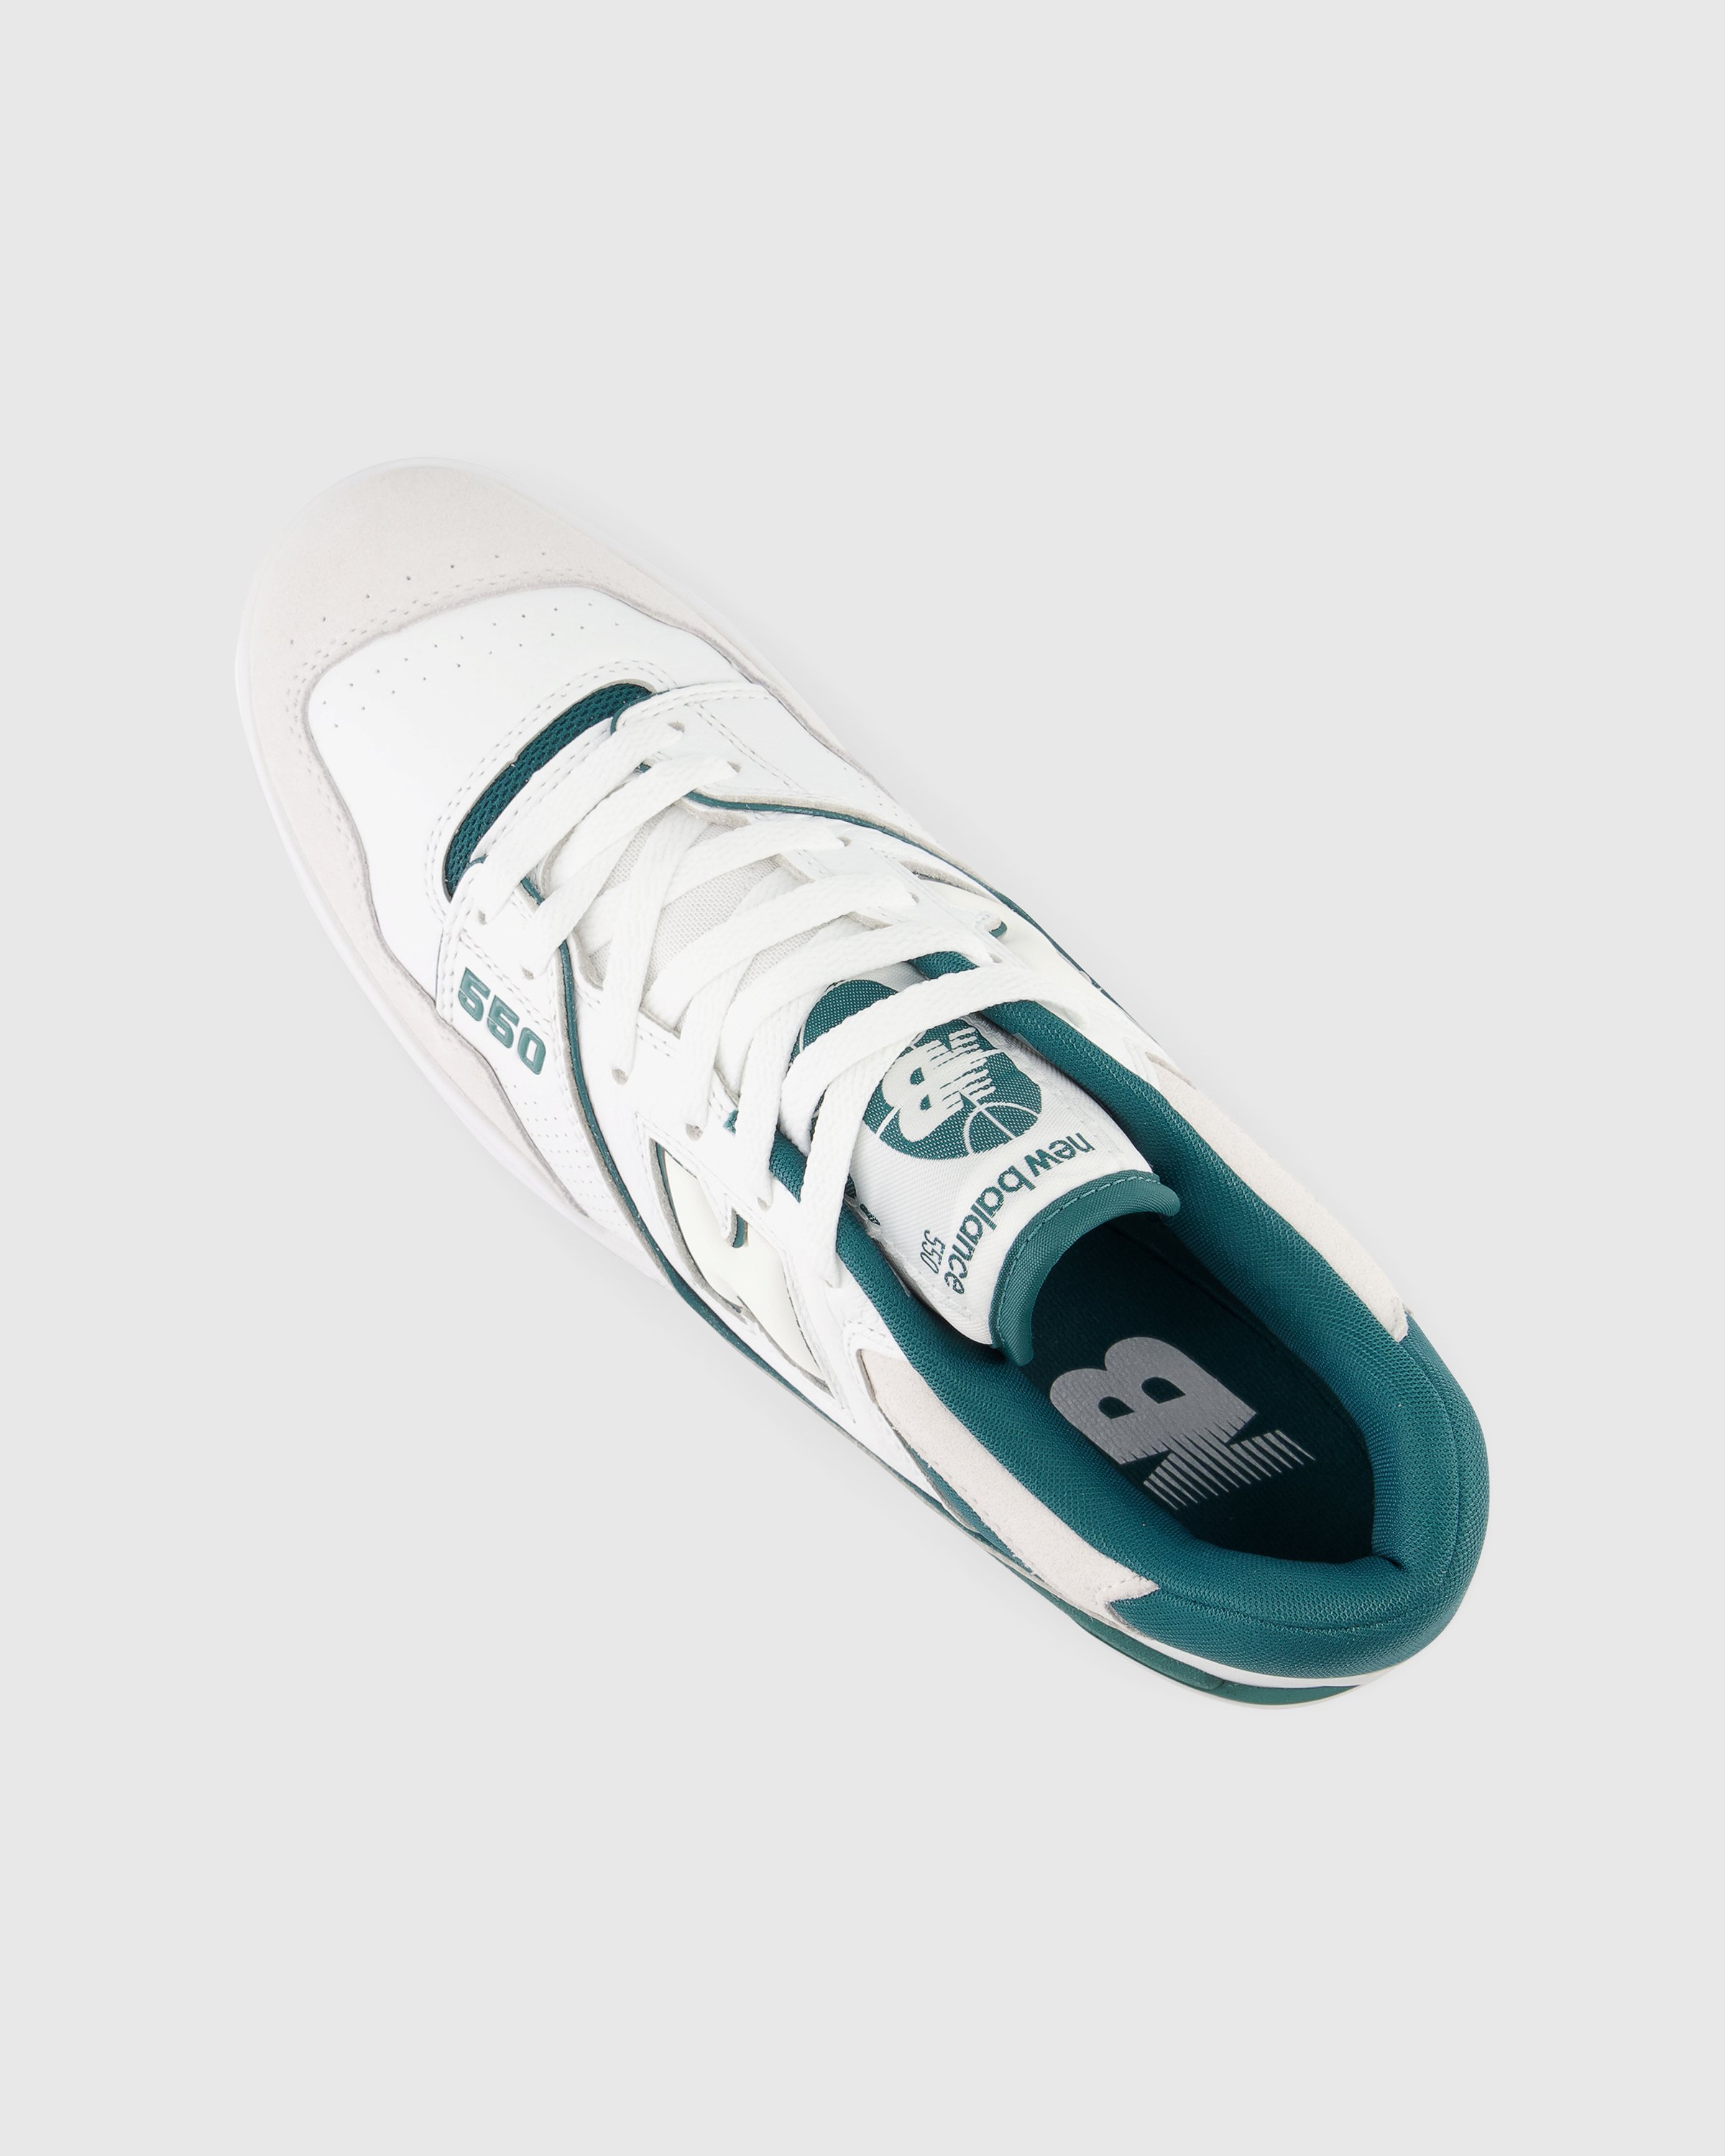 New Balance - BB 550 STA White - Footwear - White - Image 3